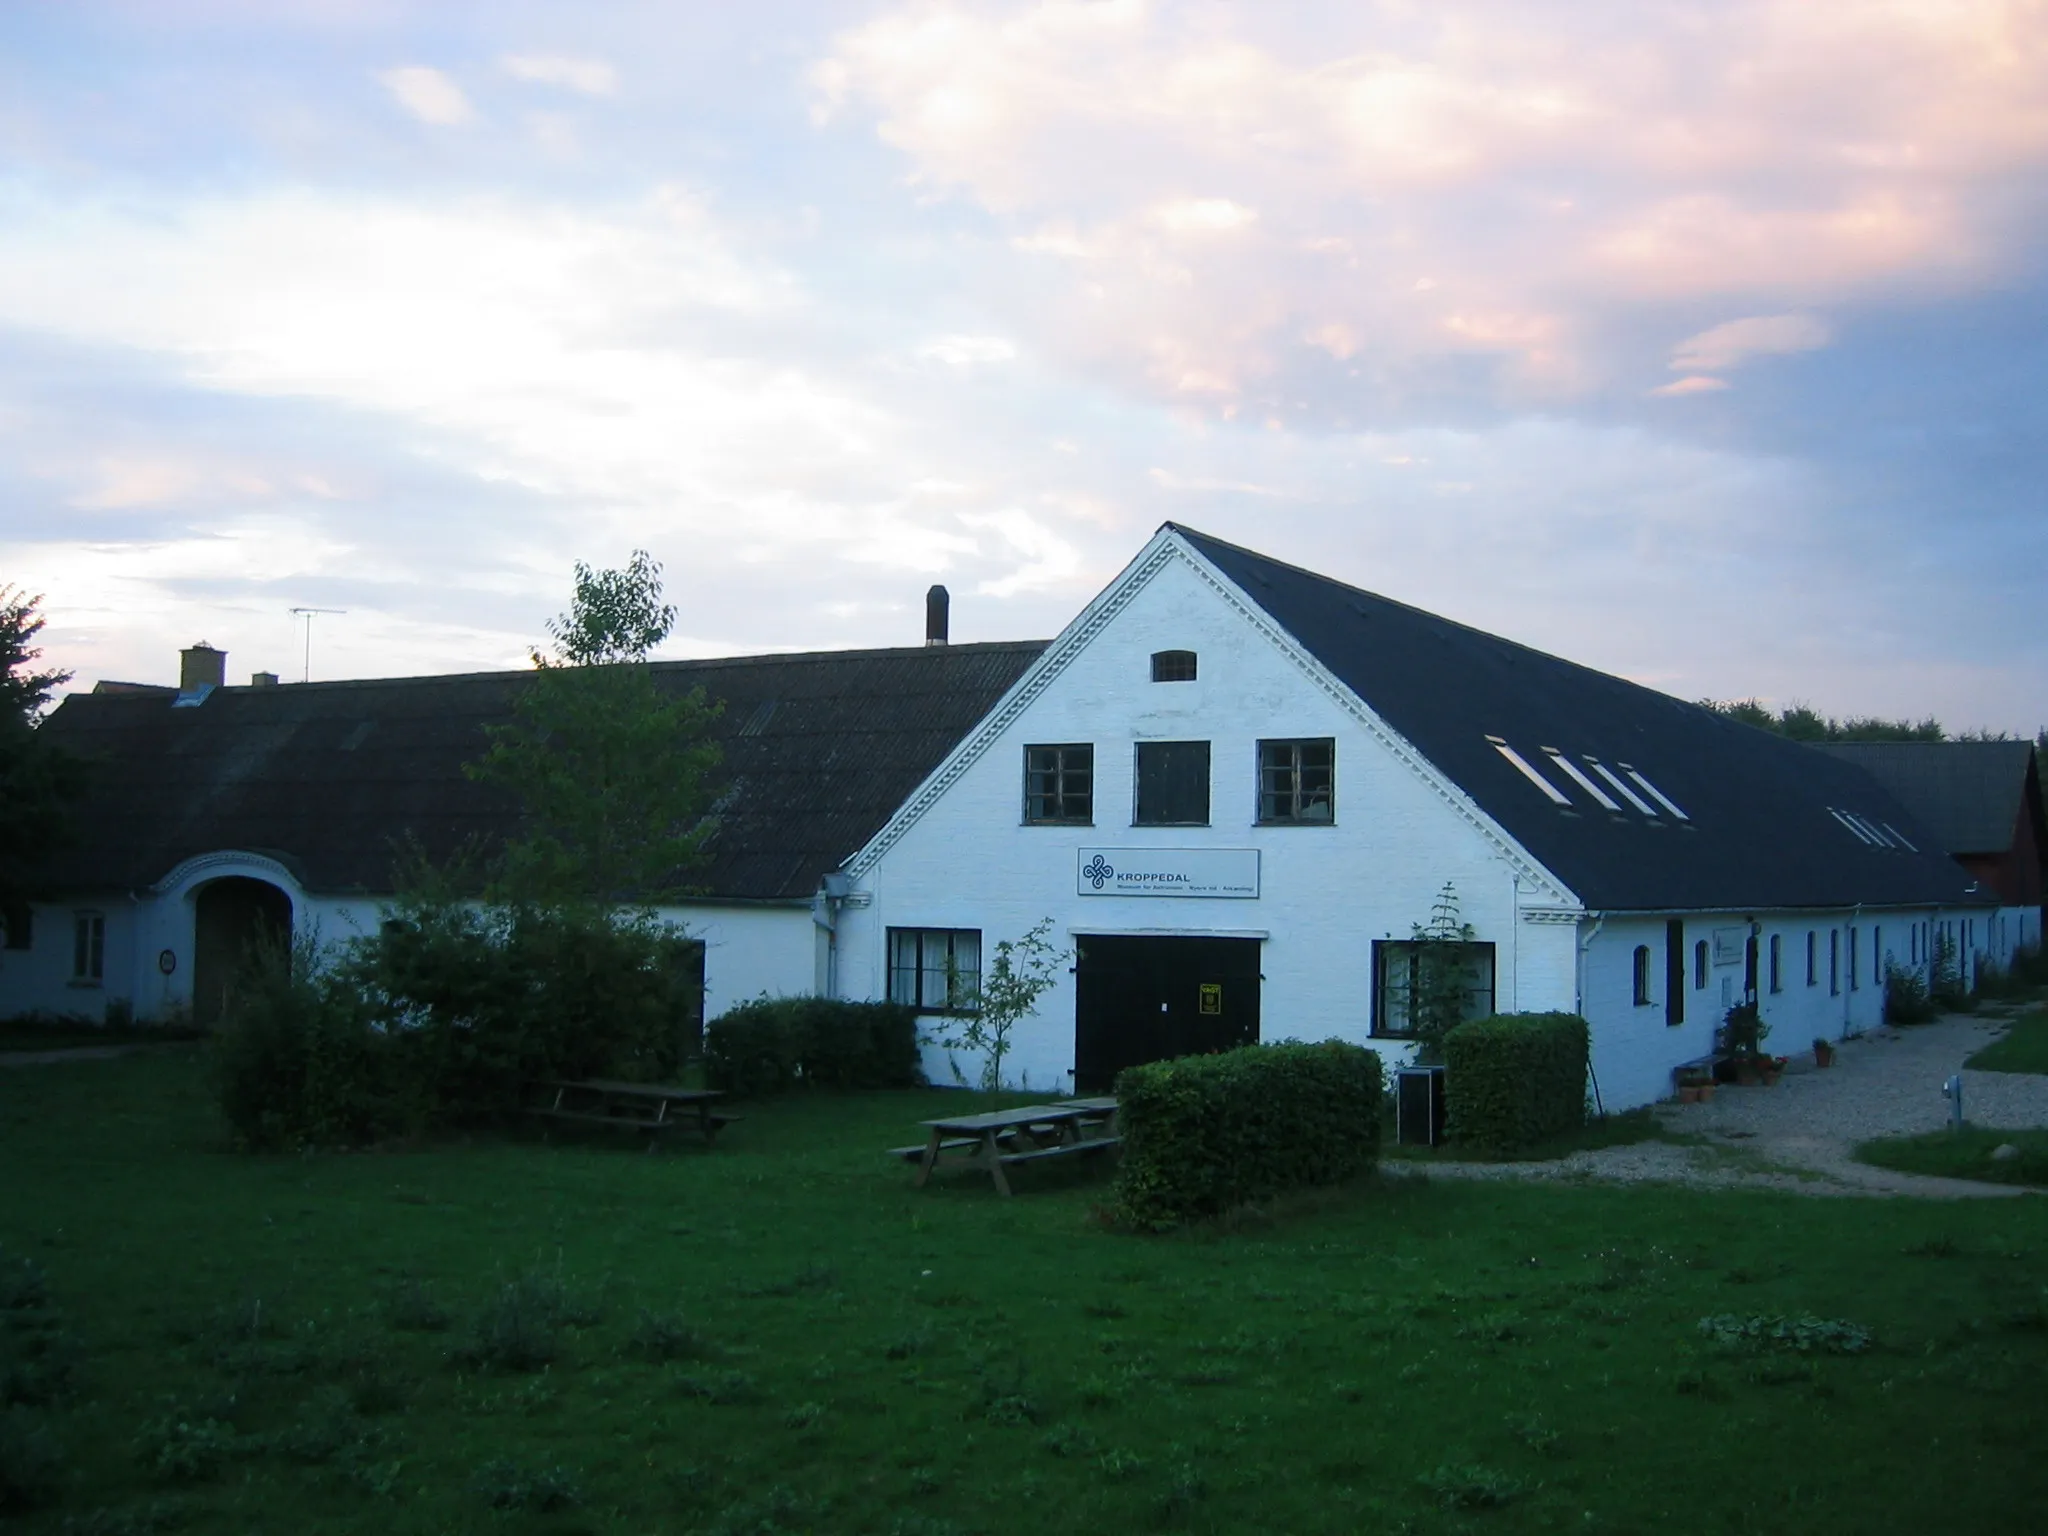 Photo showing: Kroppedal Museum in Vridsløsemagle, Denmark